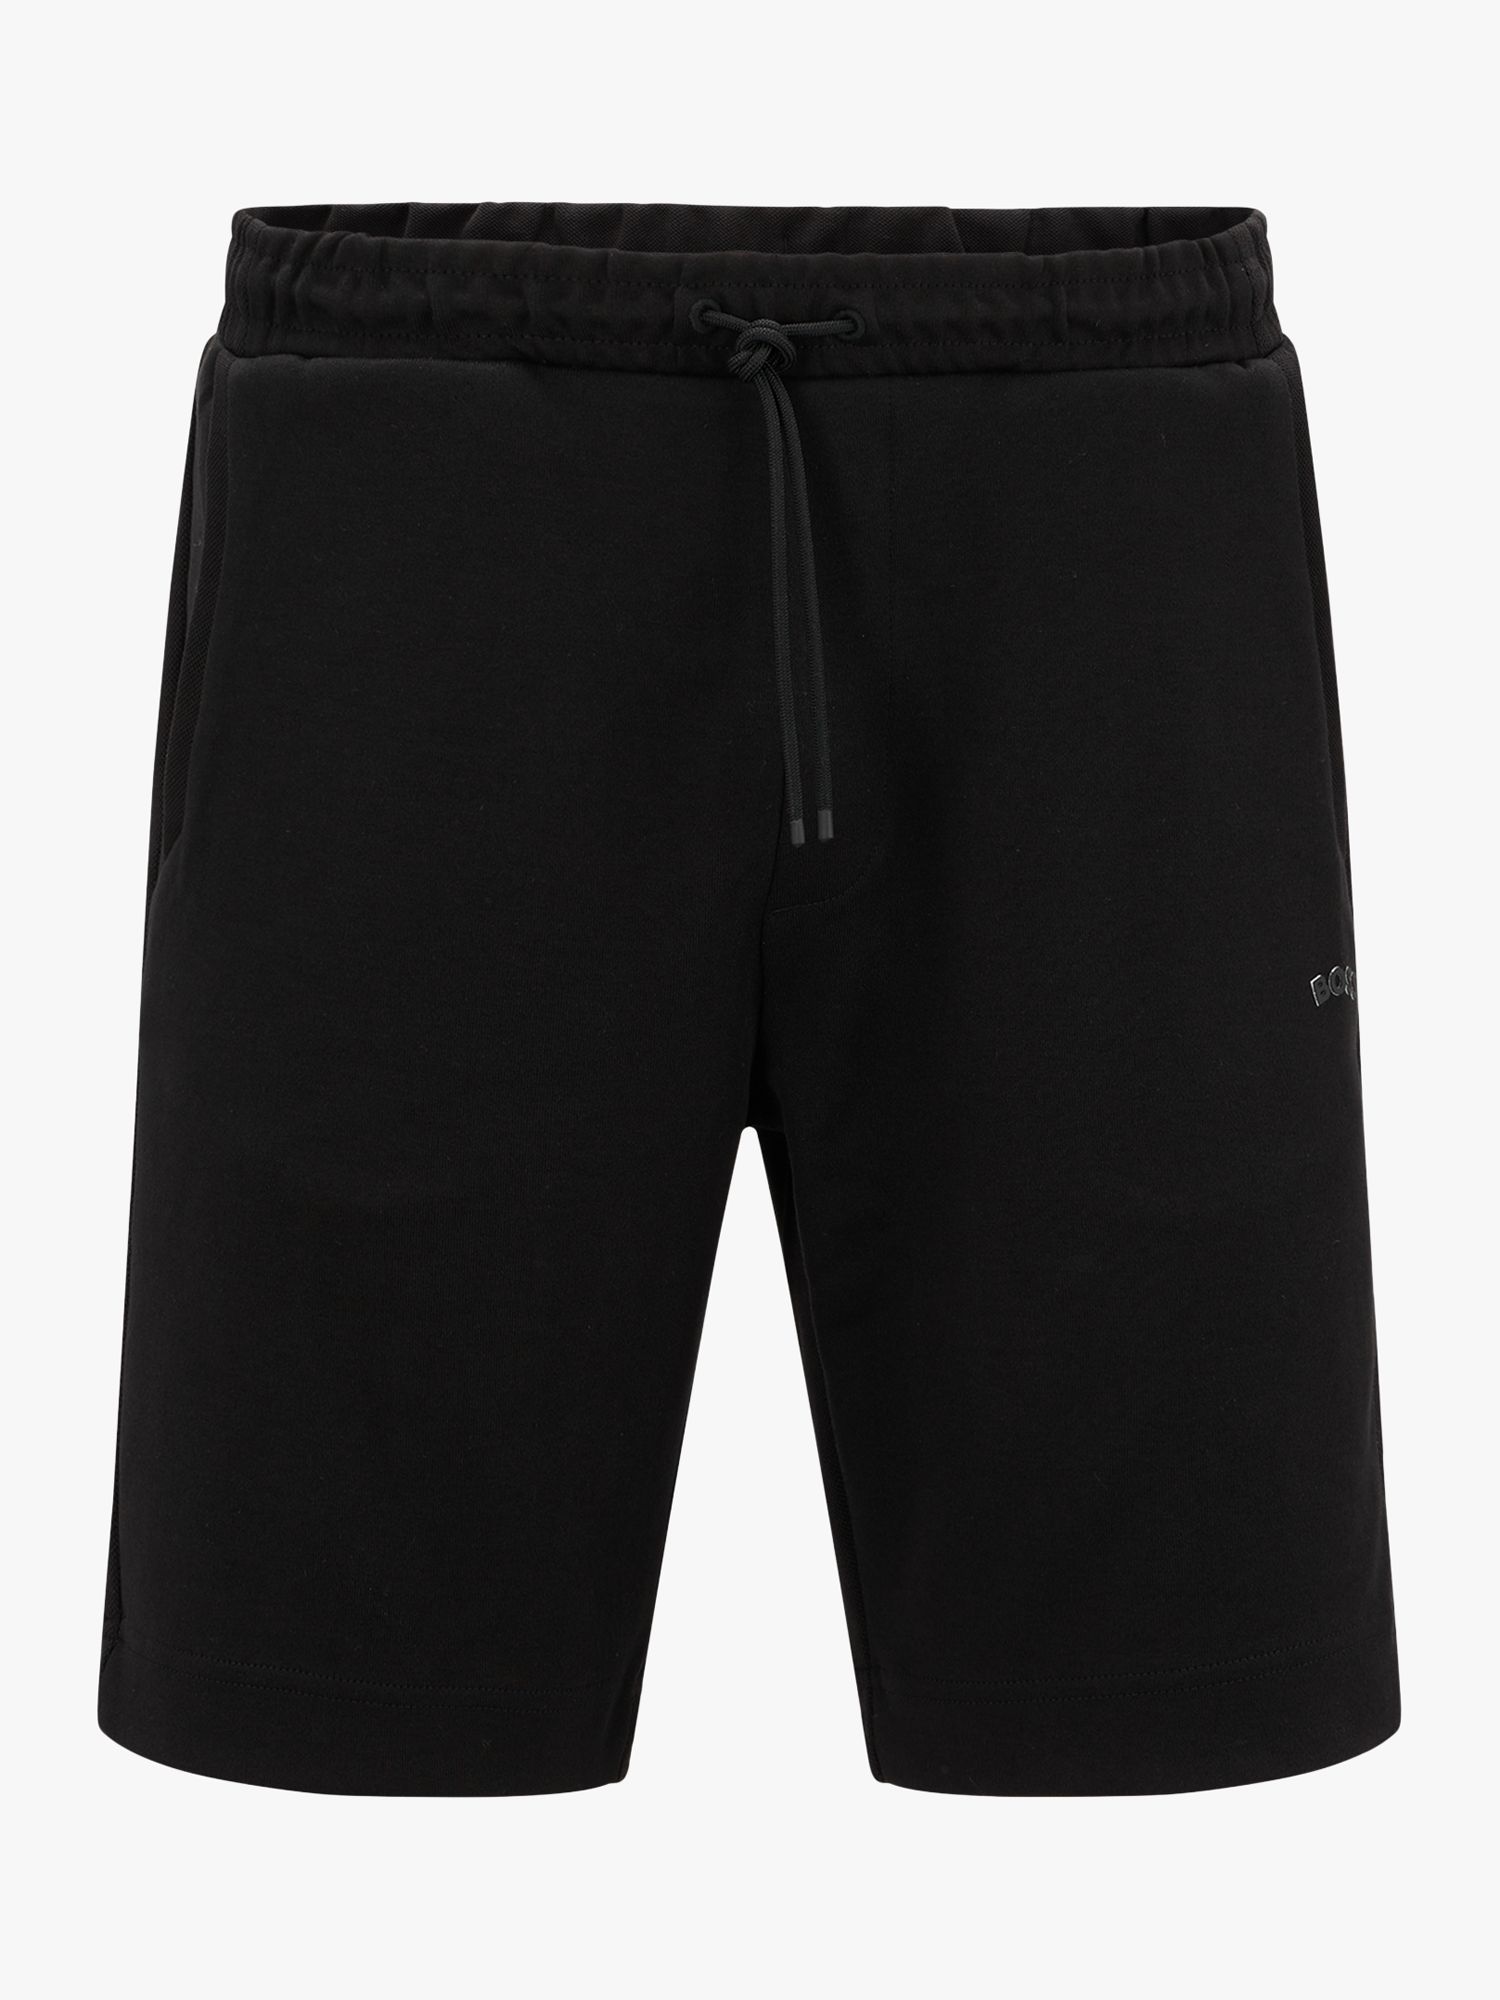 BOSS Headlo Curved Logo Shorts, Black at John Lewis & Partners